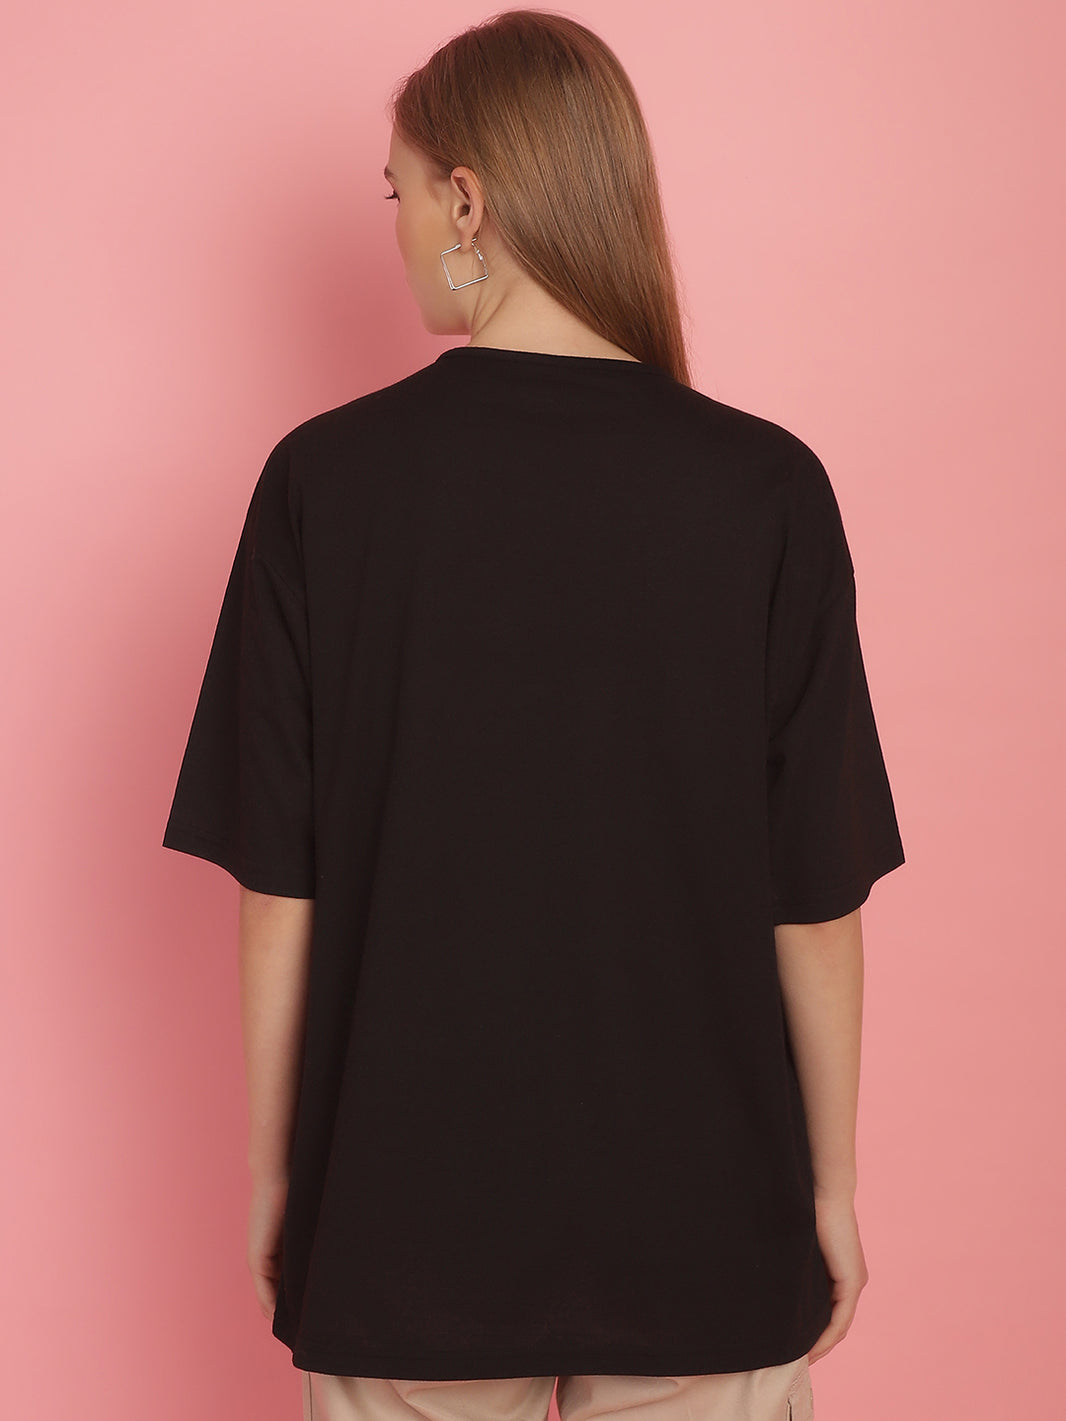 Vimal Jonney Printed Black Round Neck Cotton Oversize Half sleeves Tshirt For Women